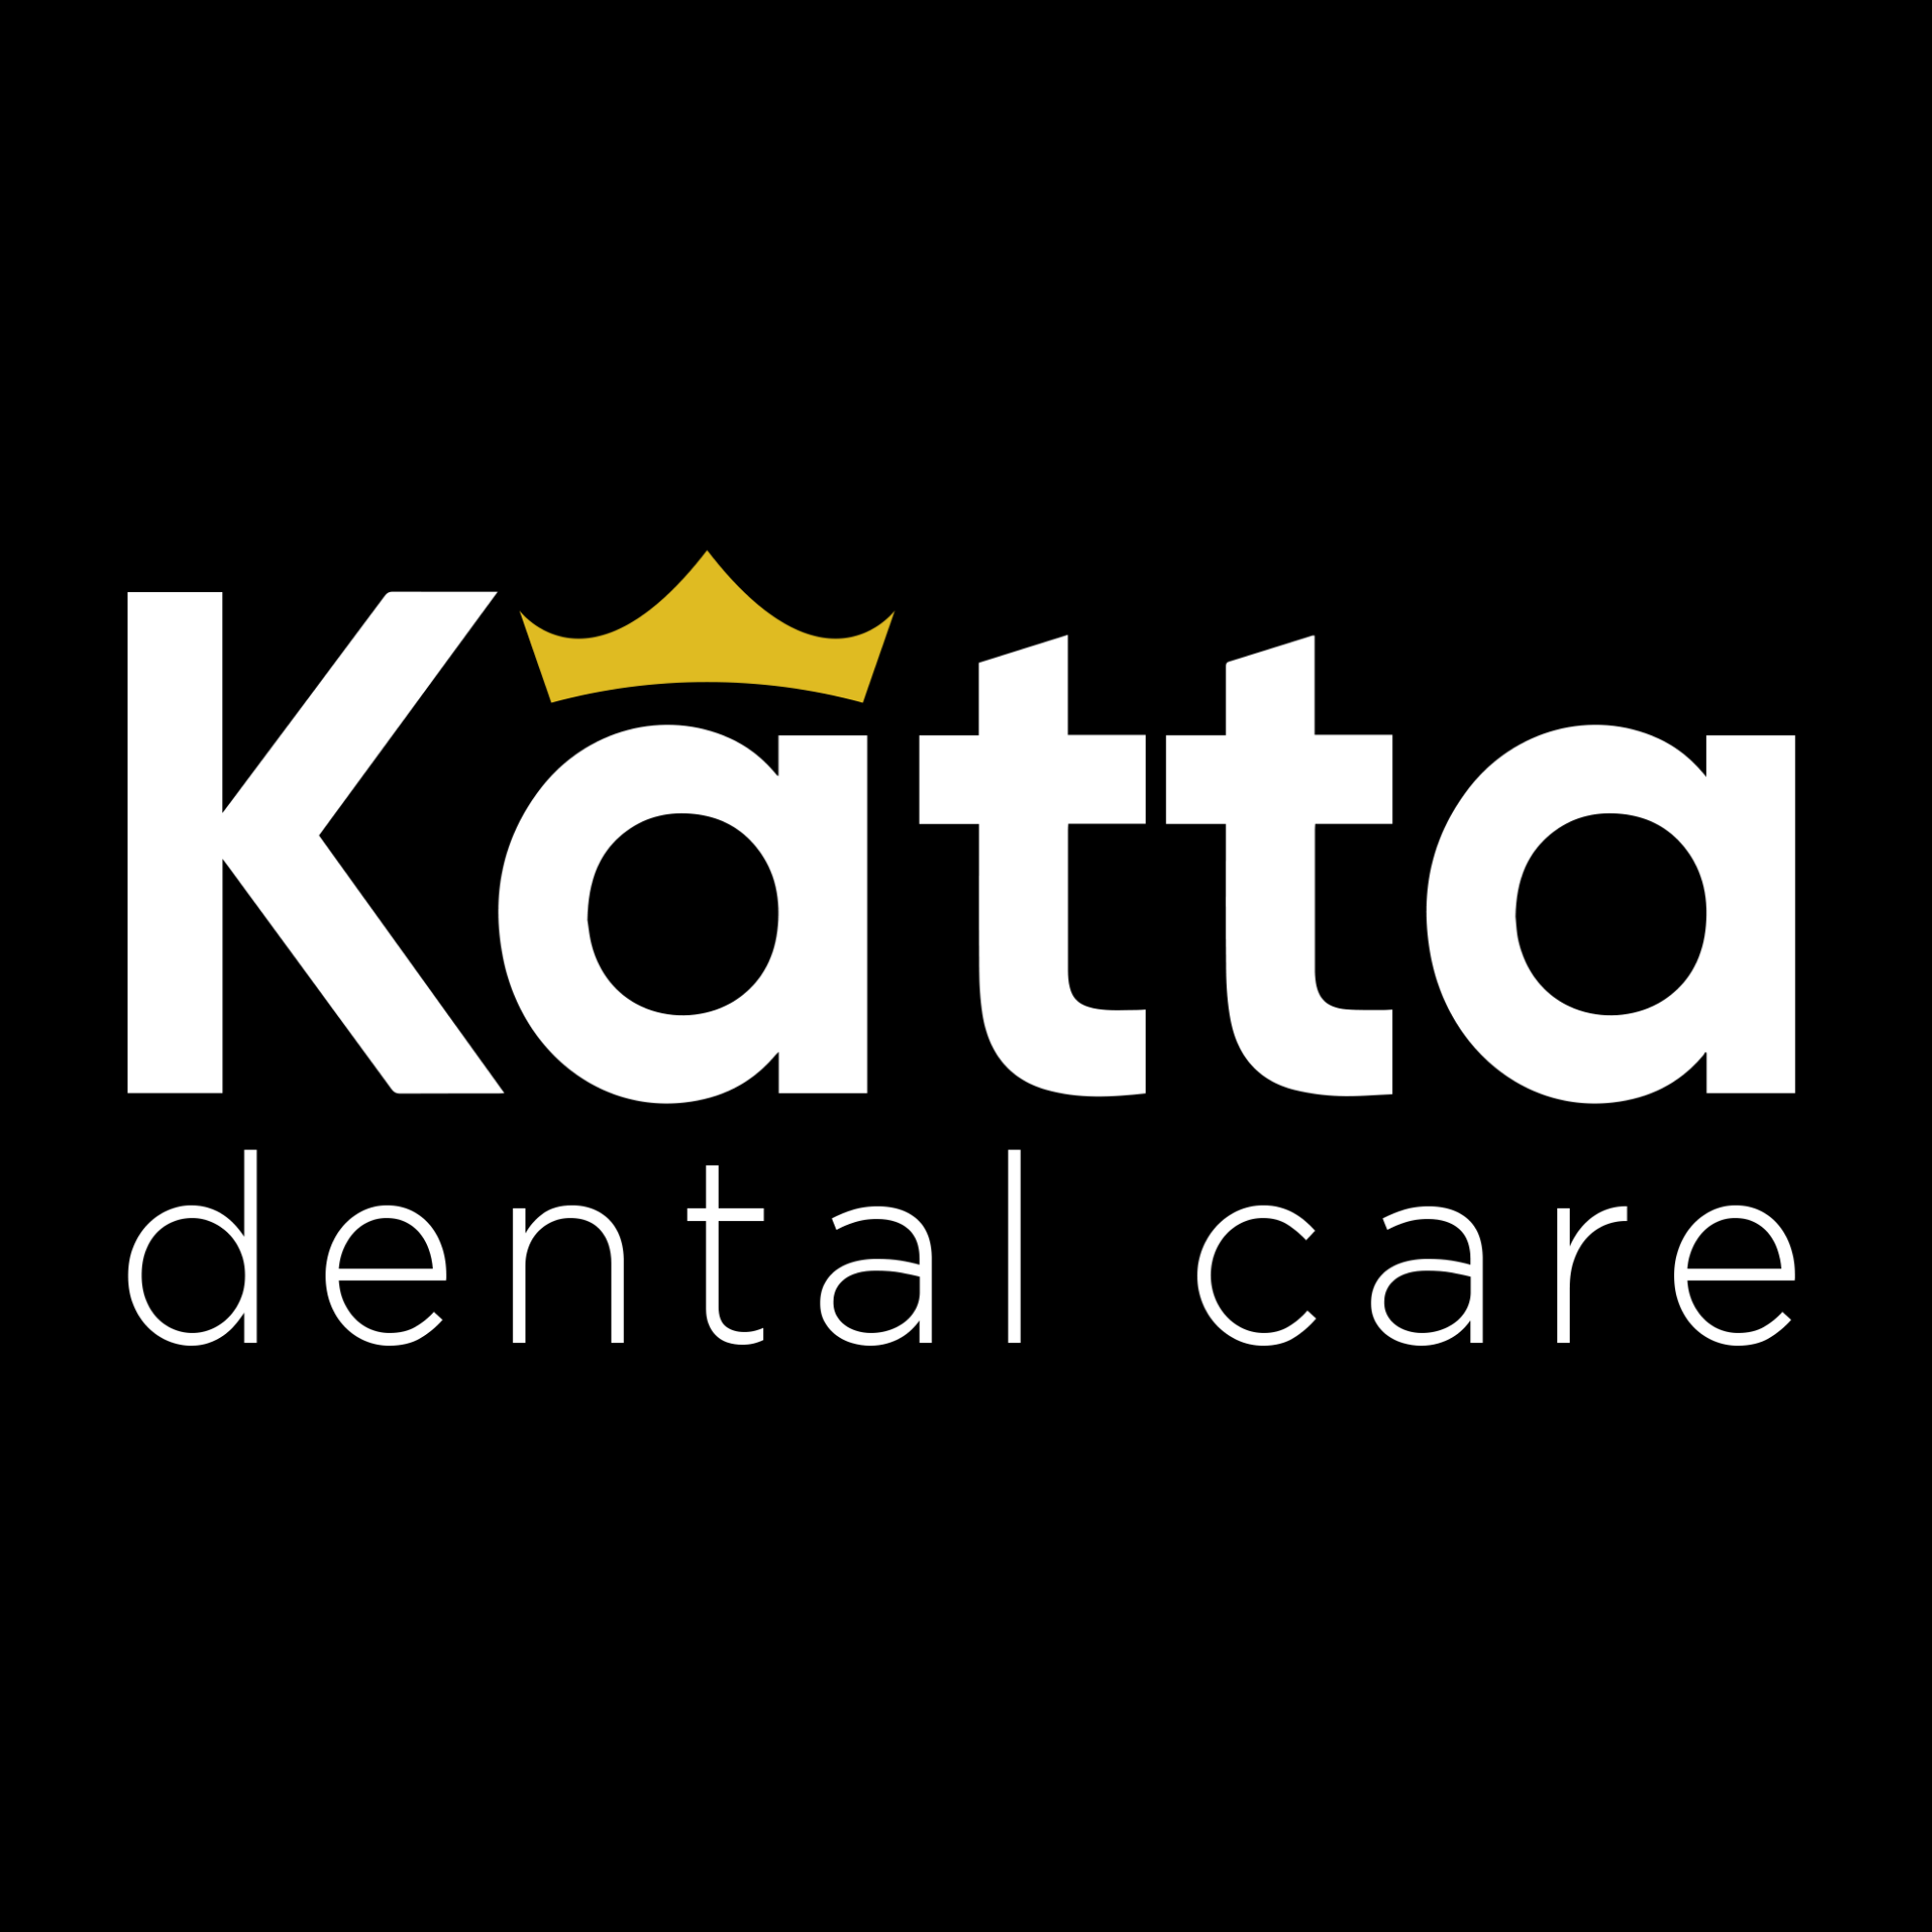 Dr. Katta